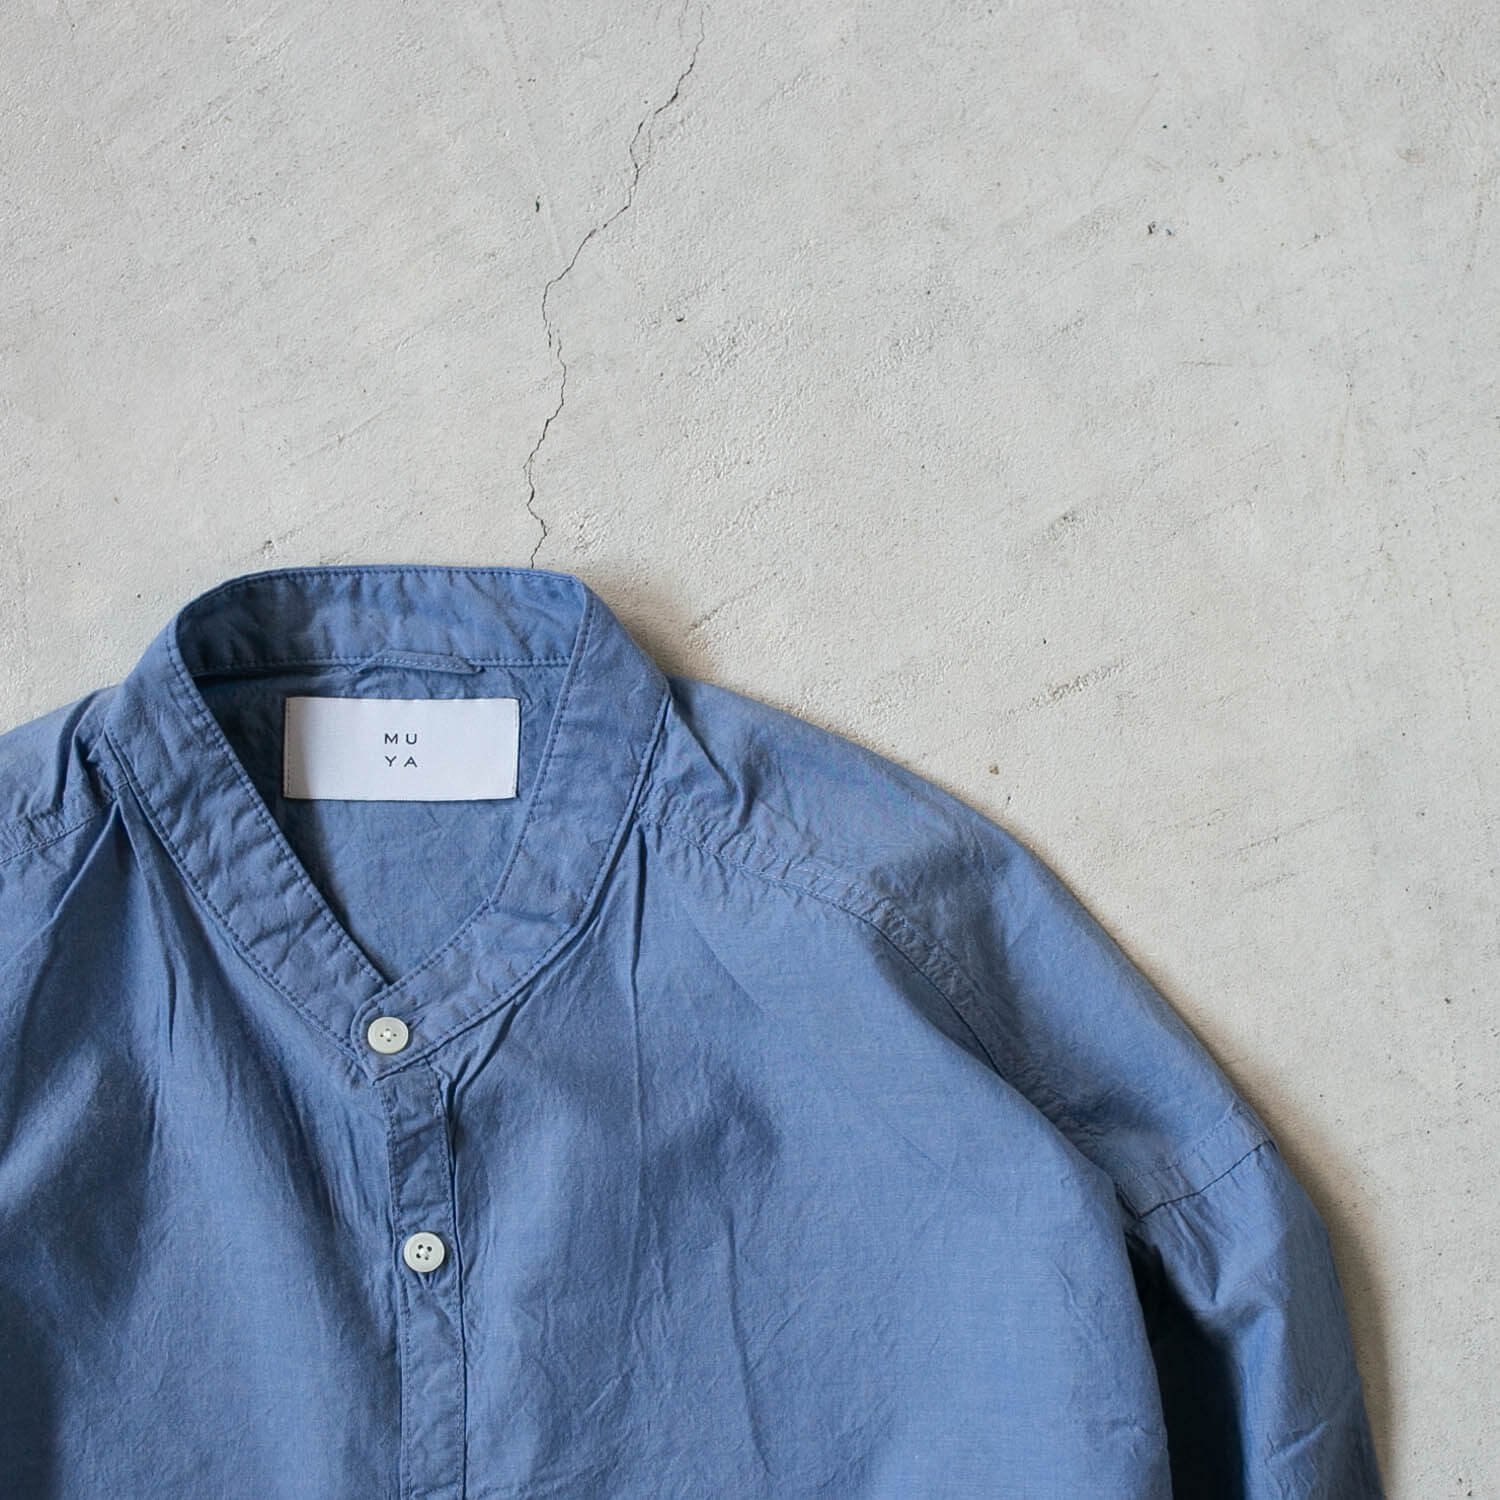 MUYA_Drop_Shoulder_Atelier_shirts_stand_collar_blue07